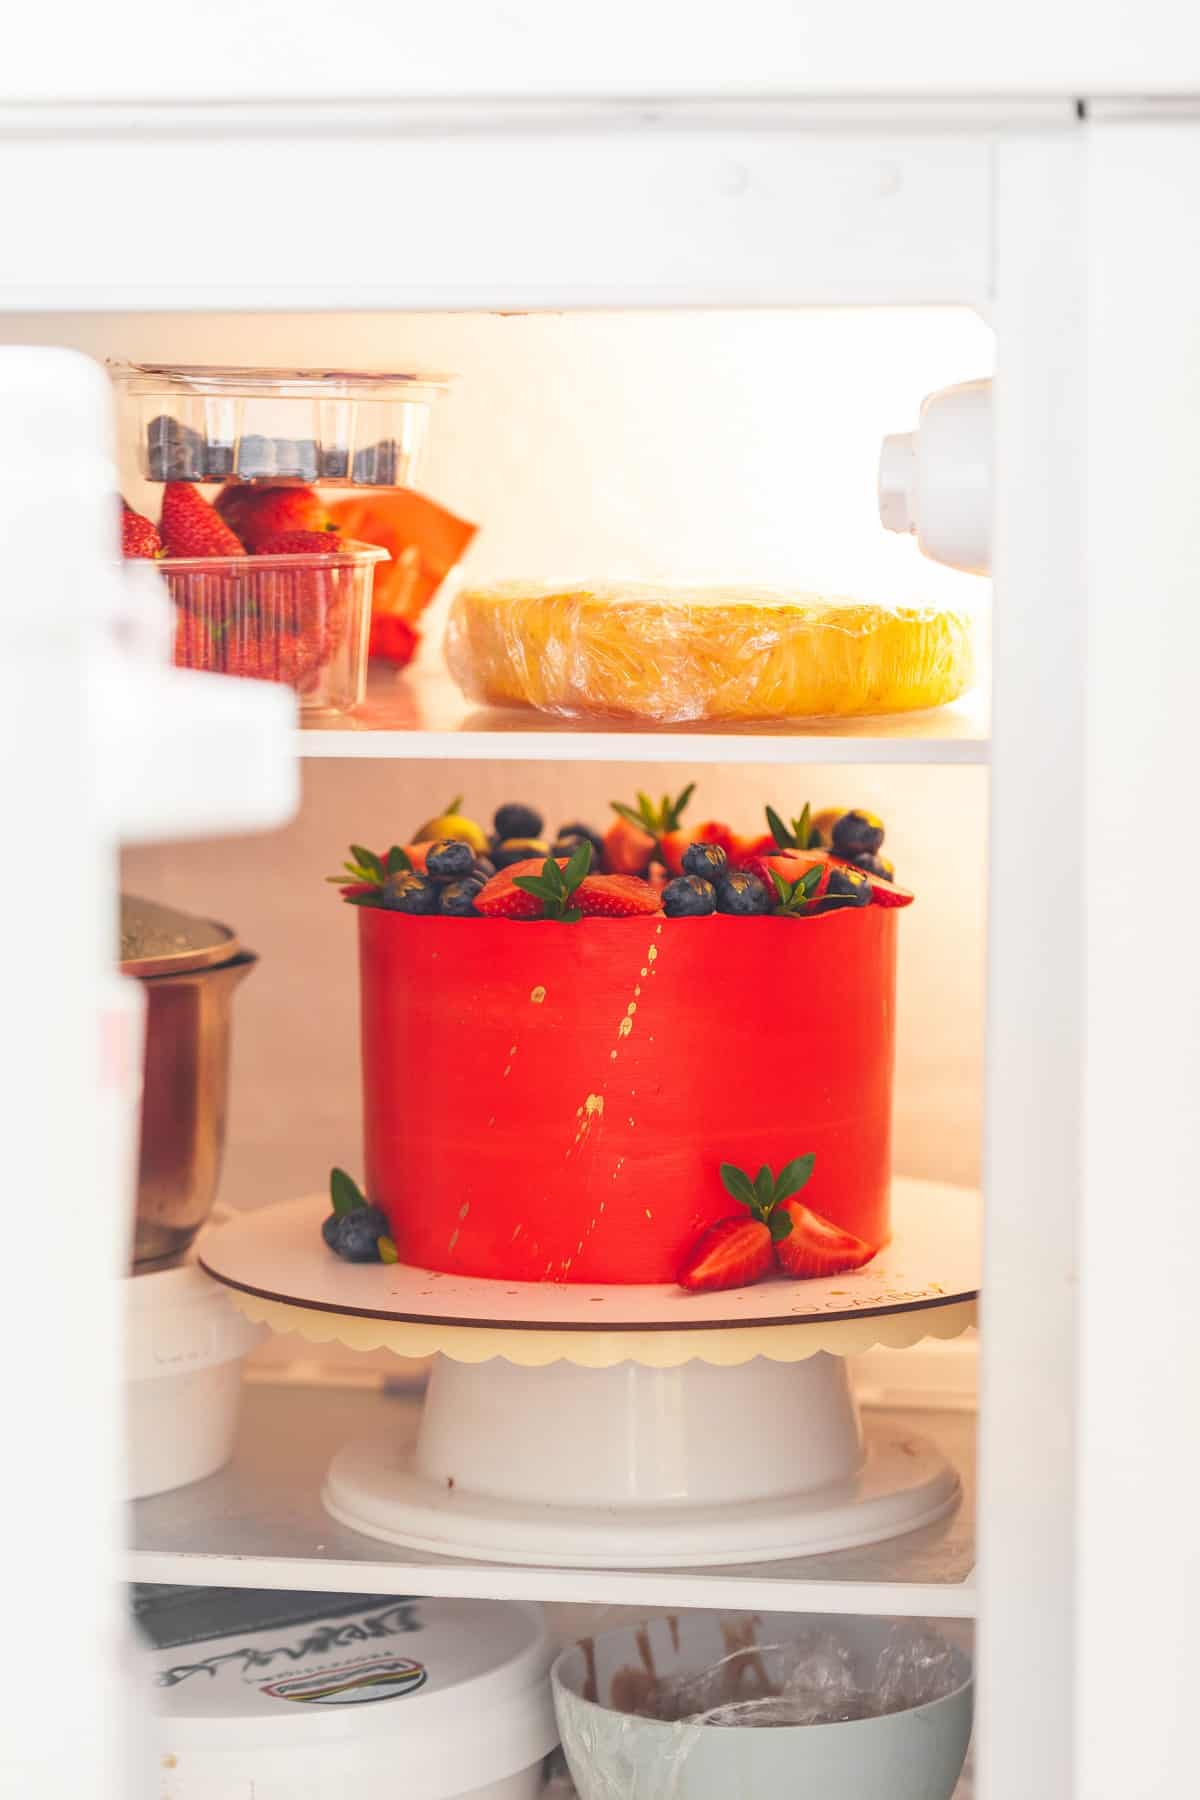 Cake stored in a fridge.